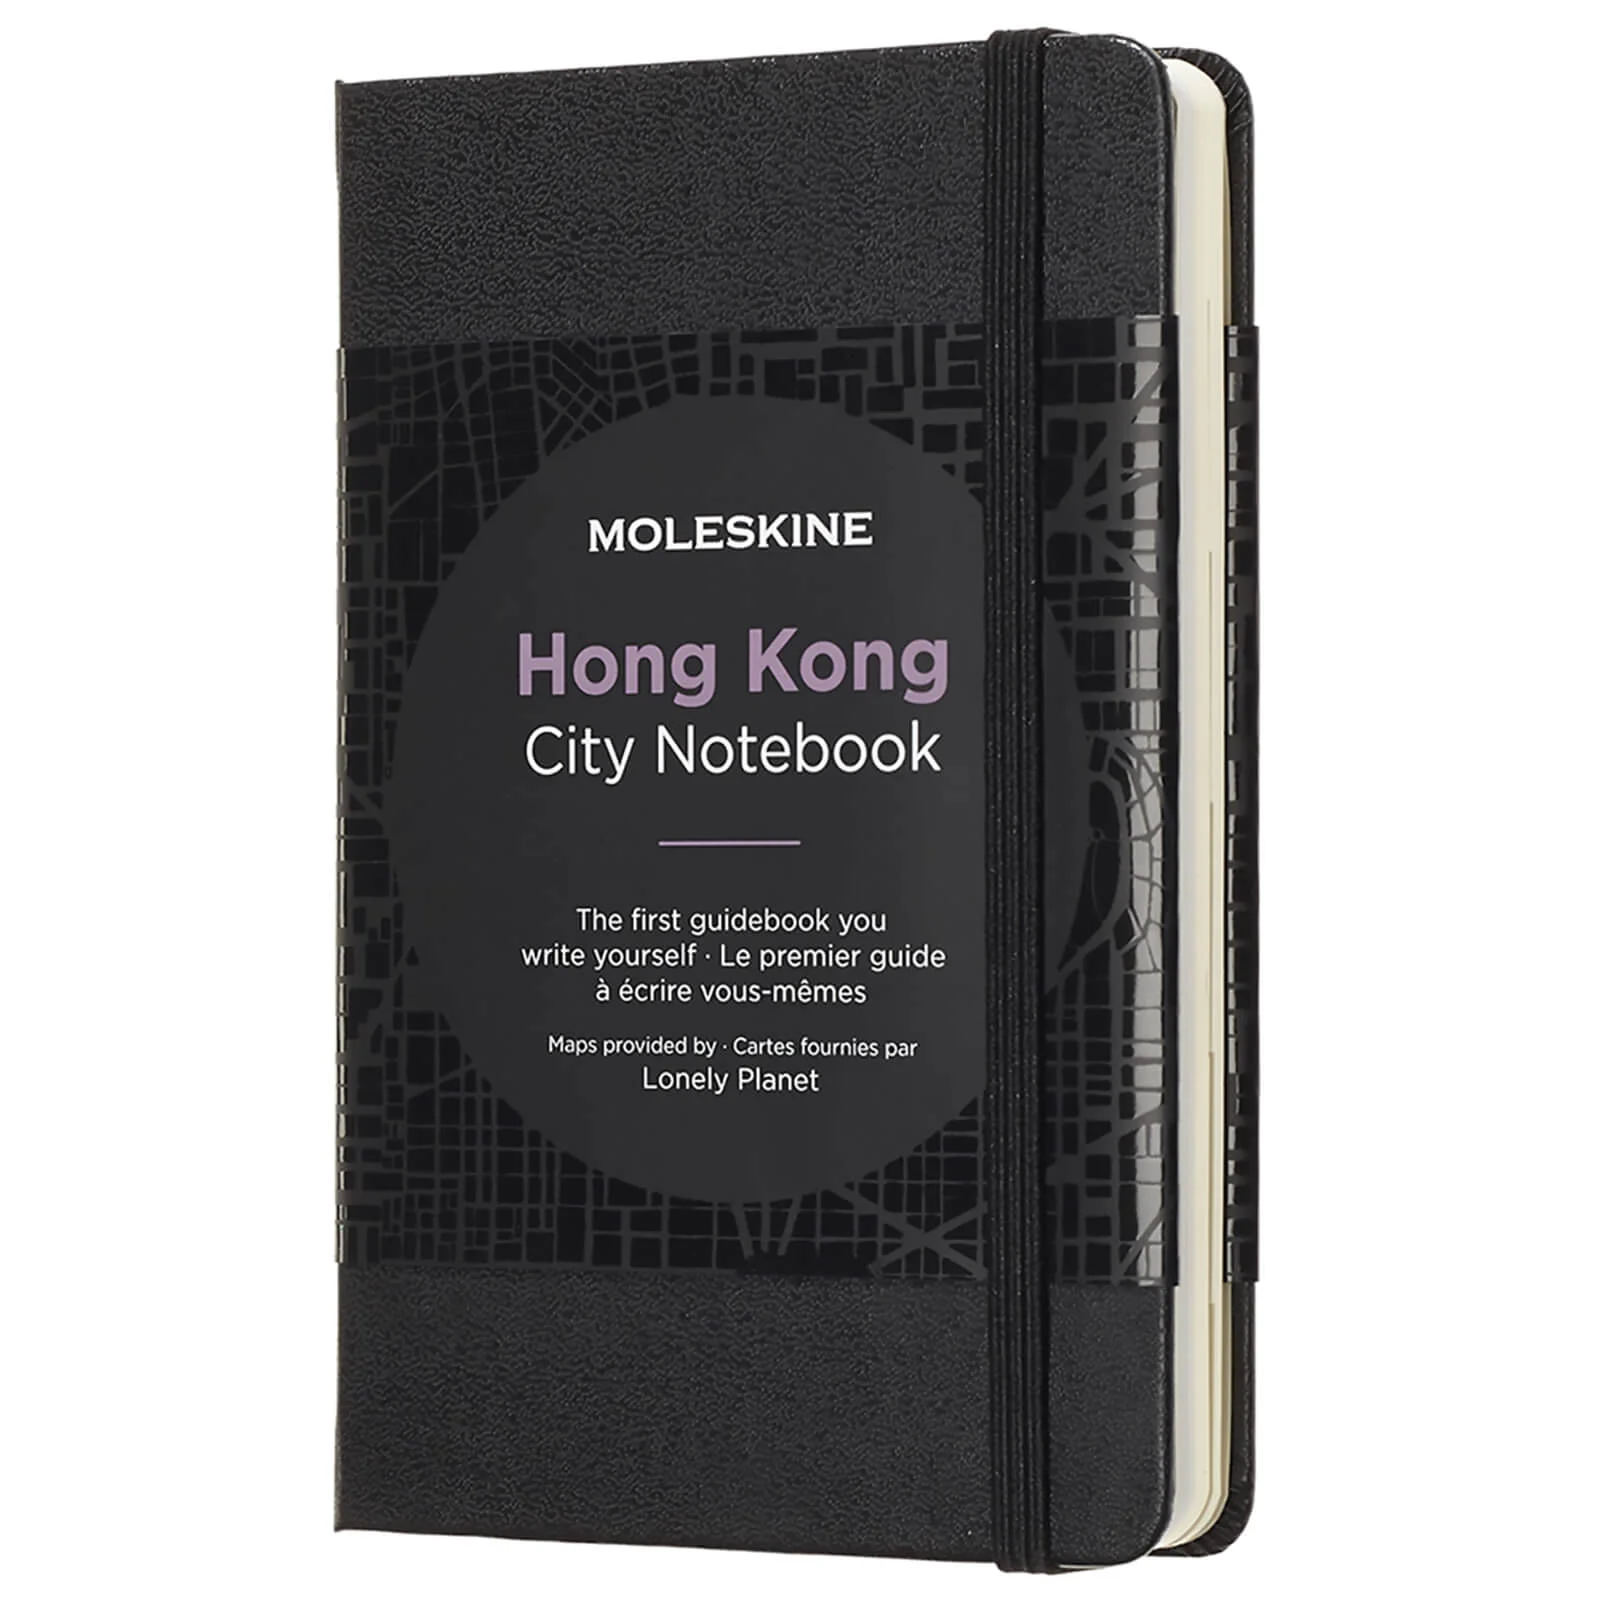 Moleskine City Notebook - Hong Kong Image 1